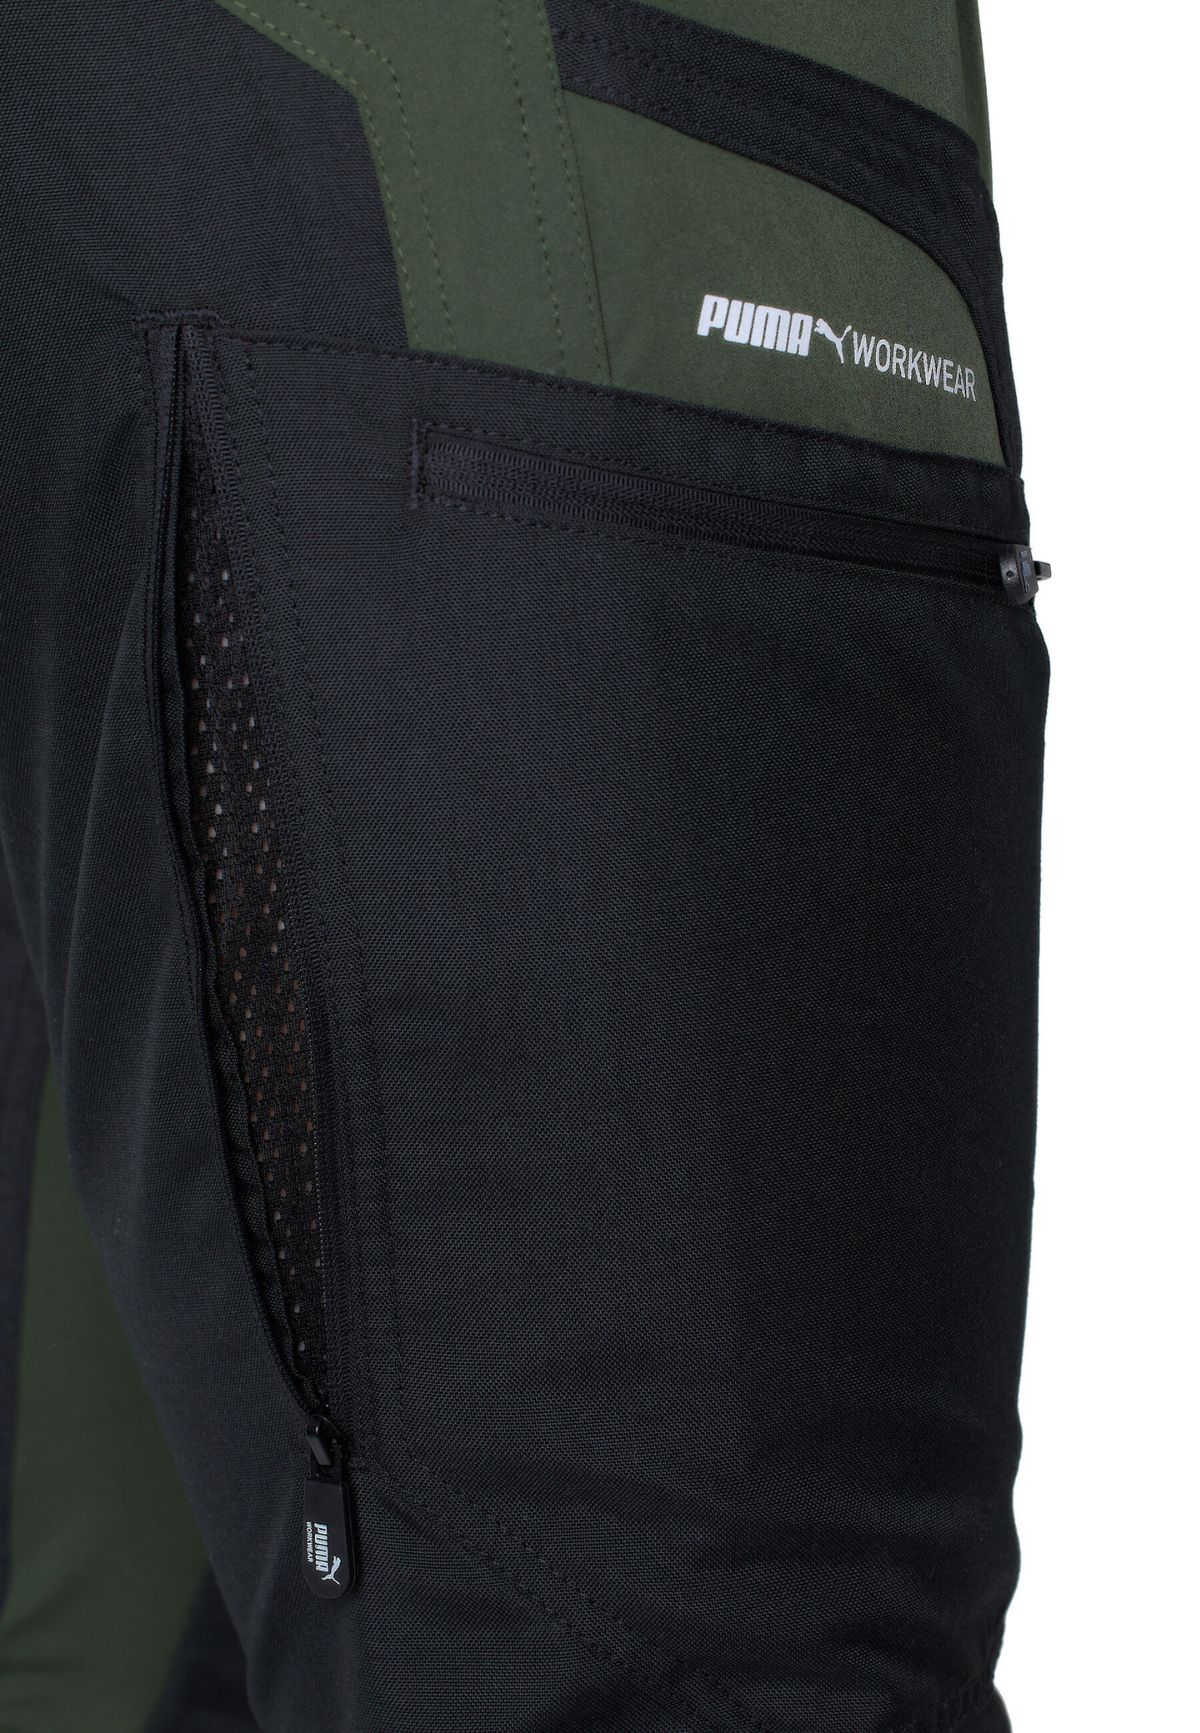 PUMA Workwear | Workwear One Outdoorhose Pro Puma Herren